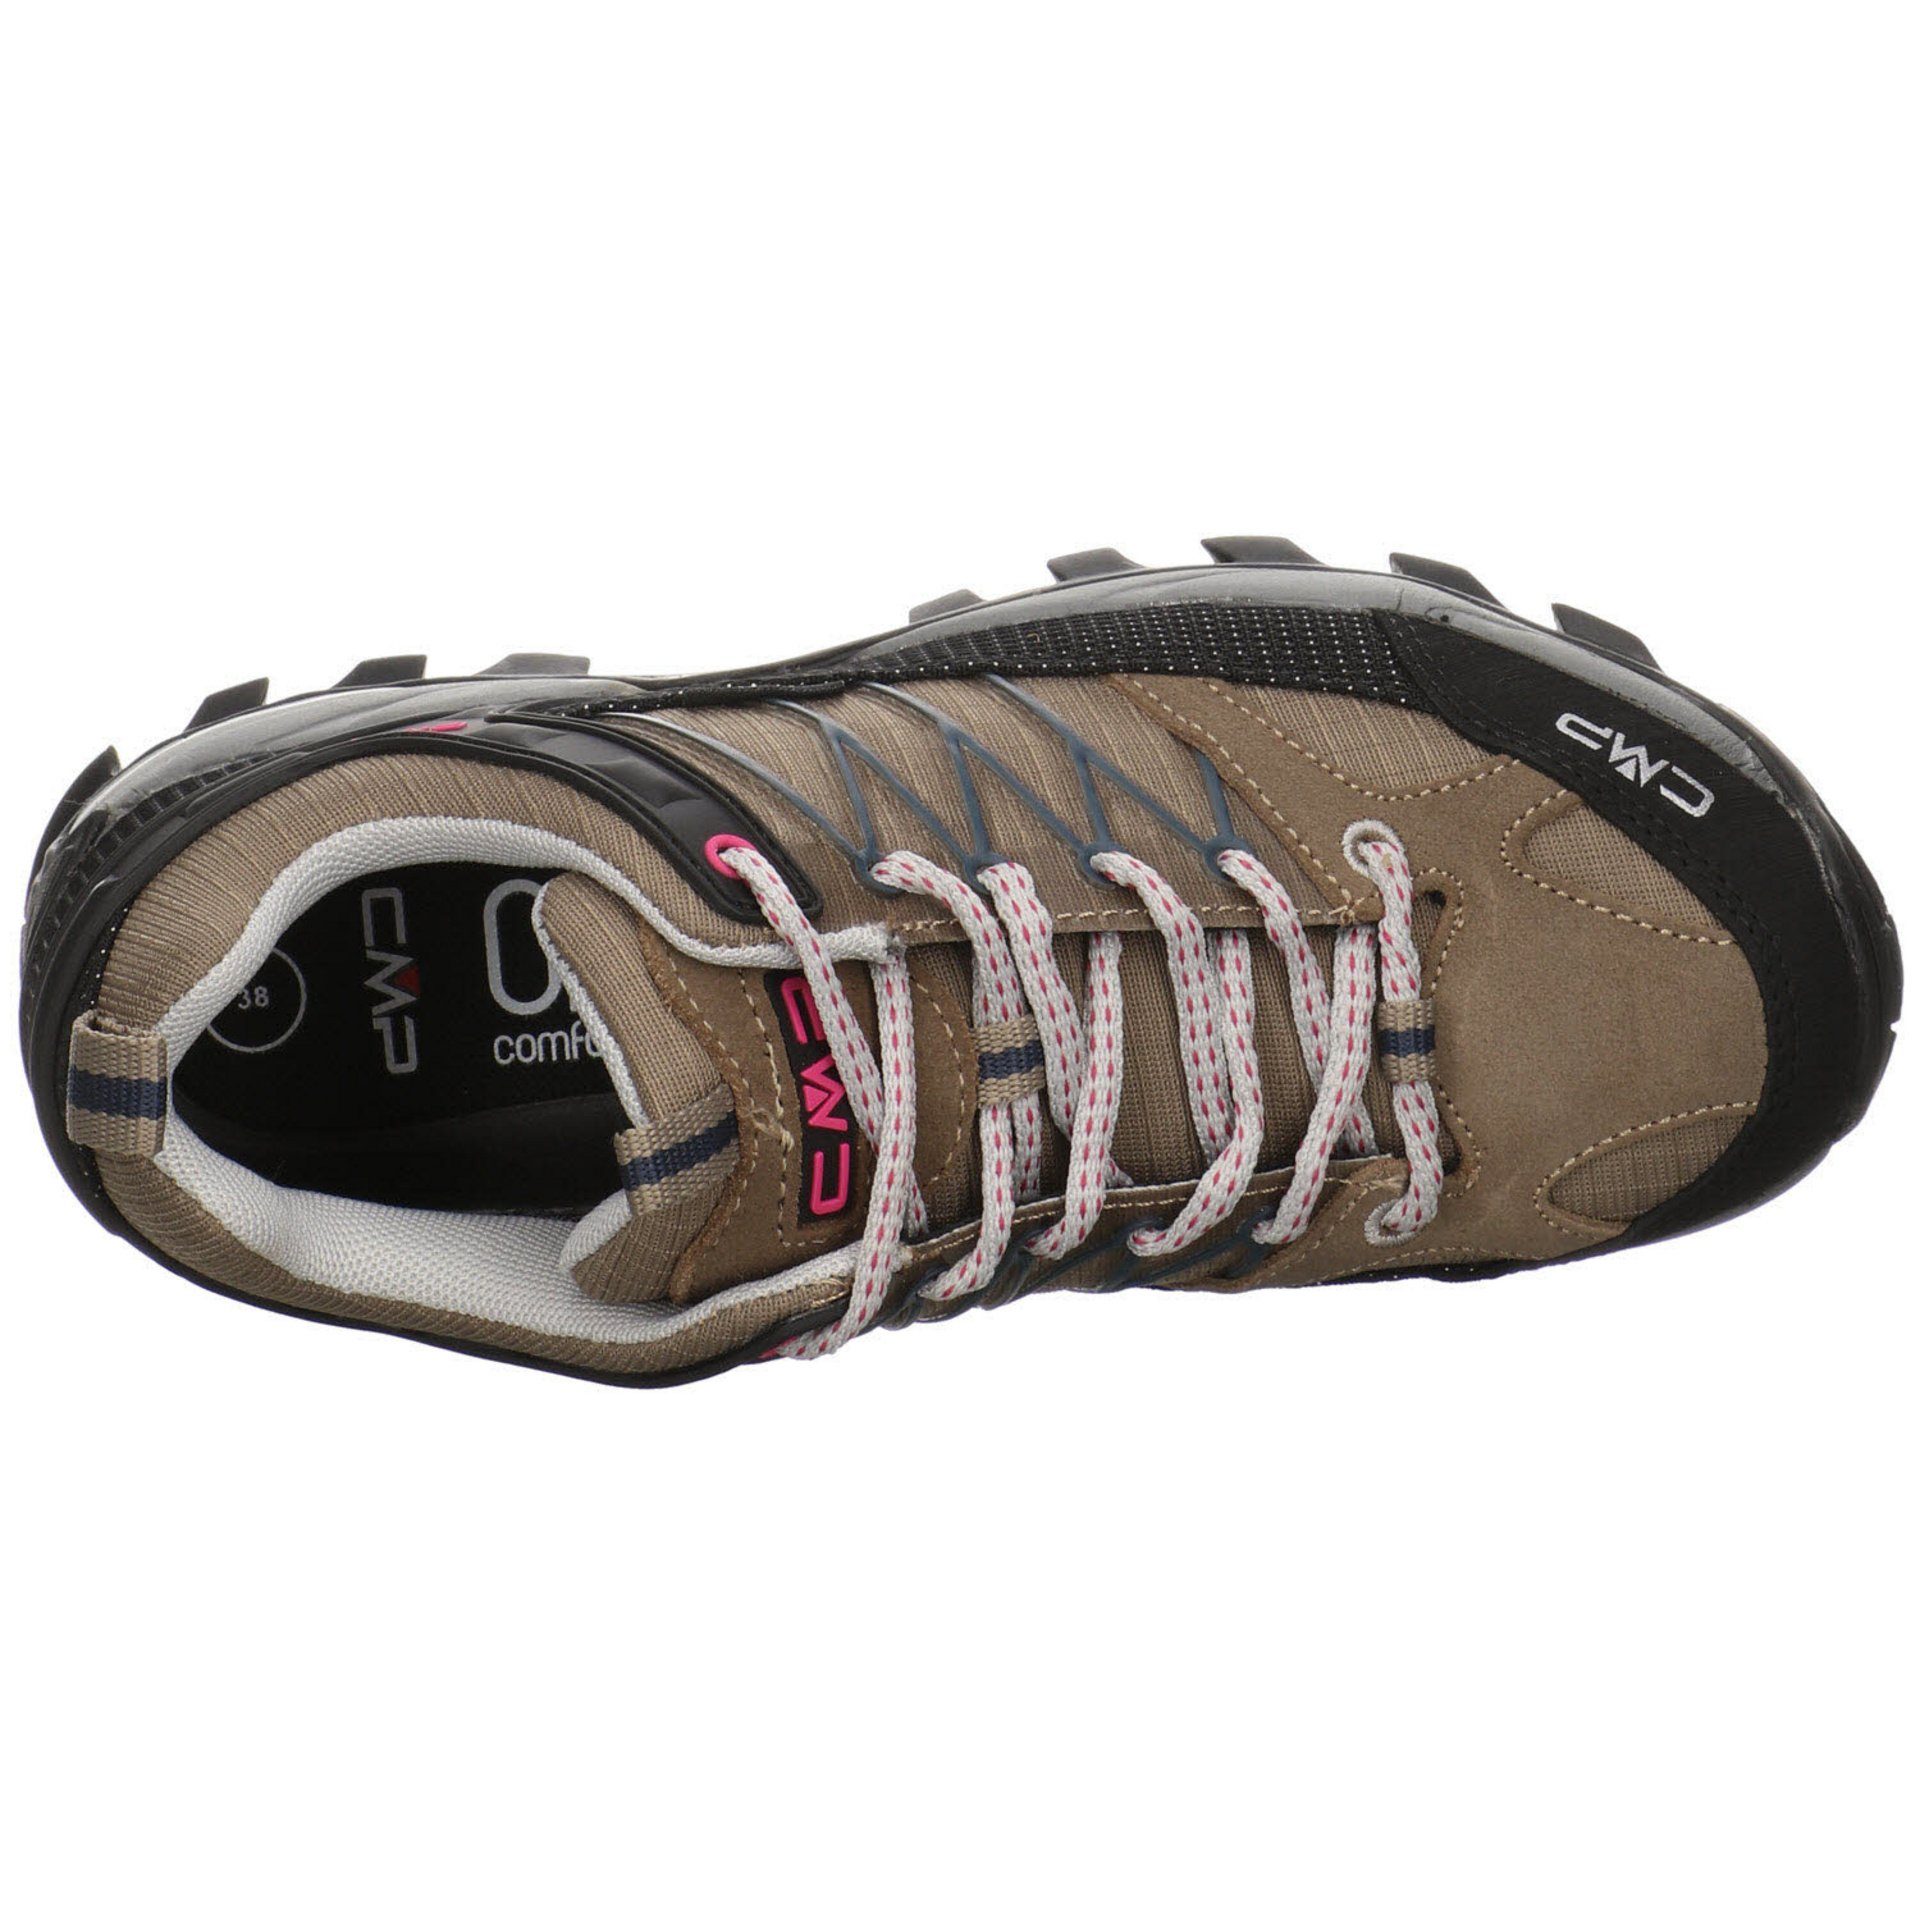 CMP Damen Schuhe Outdoor Outdoorschuh mit Synthetikkombination Outdoorschuh Low Rigel beige kombiniert